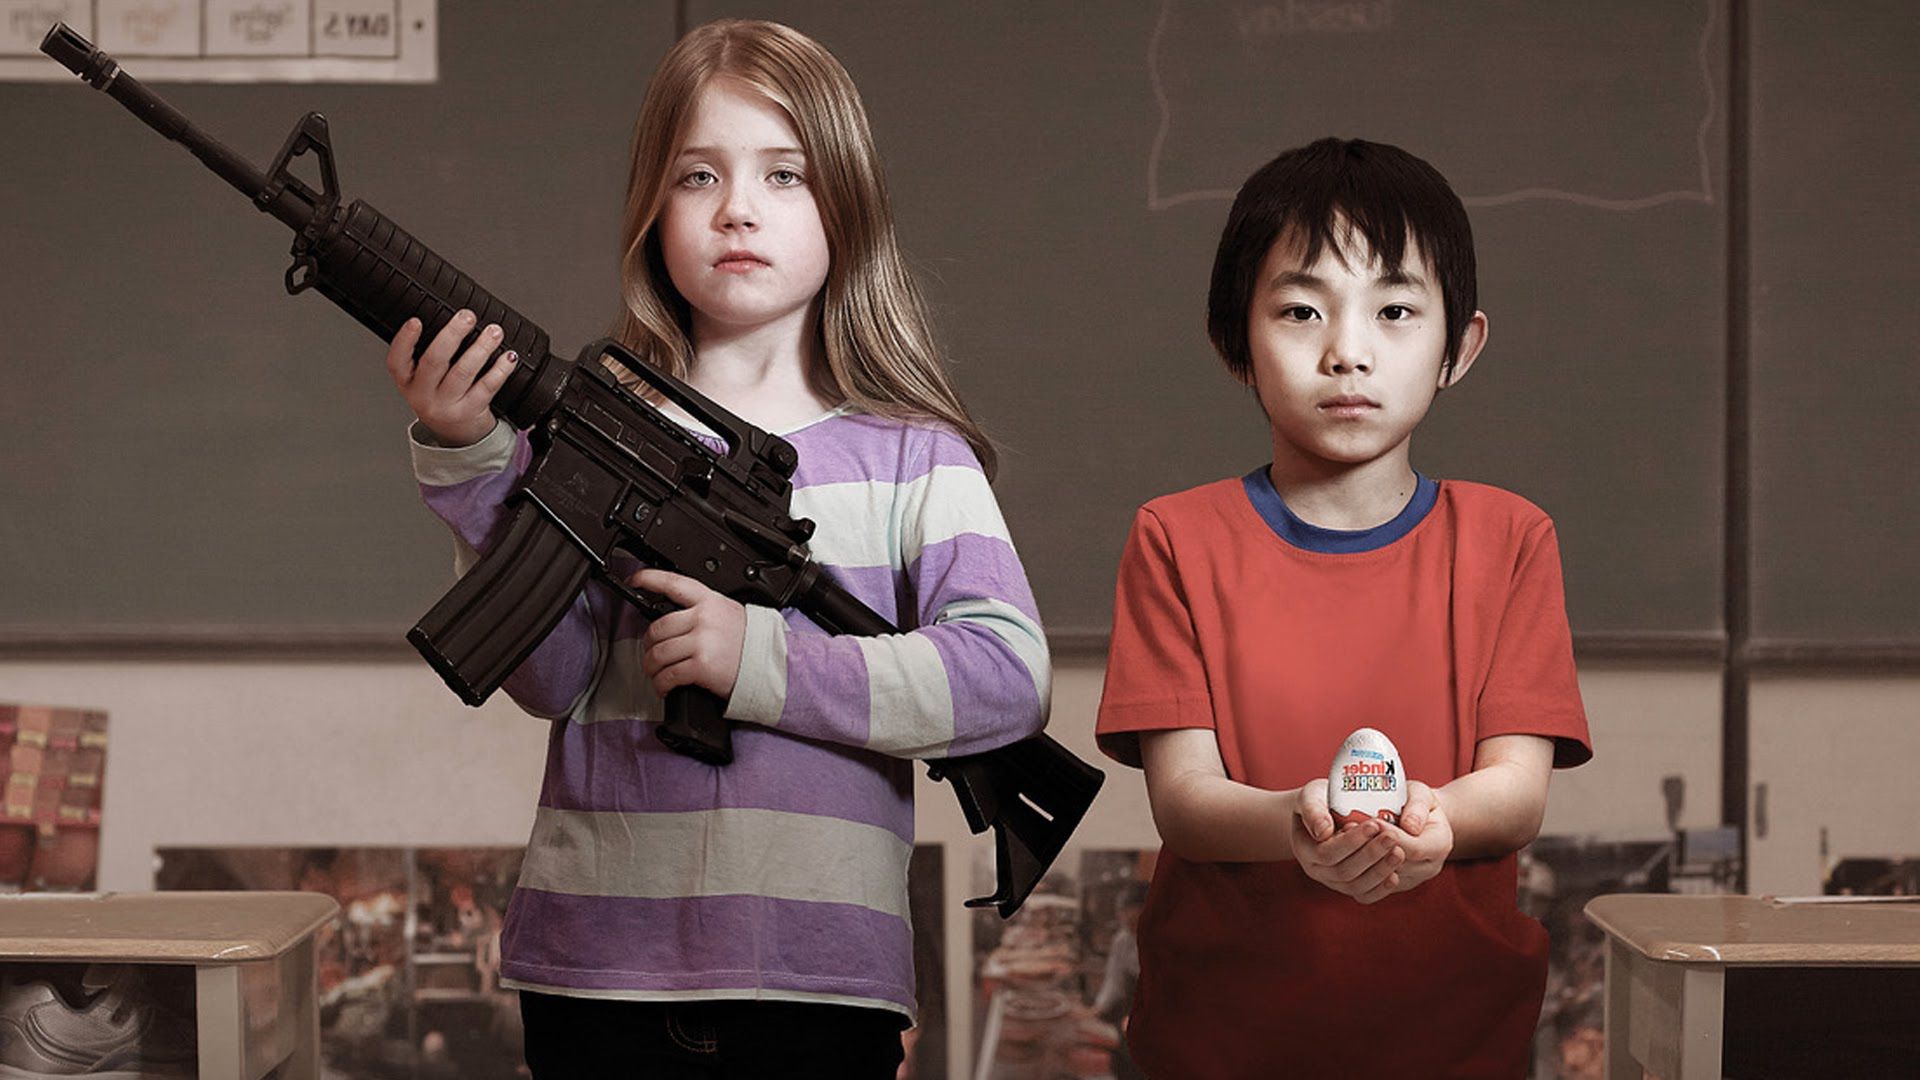 Documentaire Kill zone USA (1/2) Etats-Unis, la loi des armes